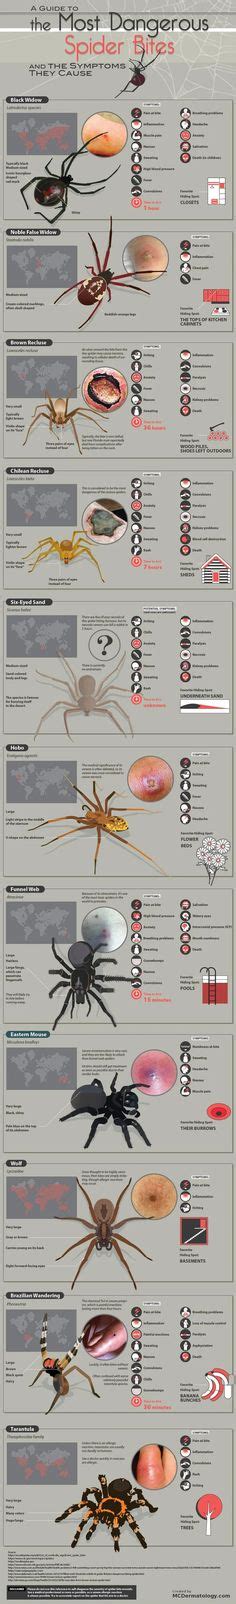 Spiders Bites Coolguides Spider Bite Symptoms Poisonous Spiders Spider Venom Data Charts